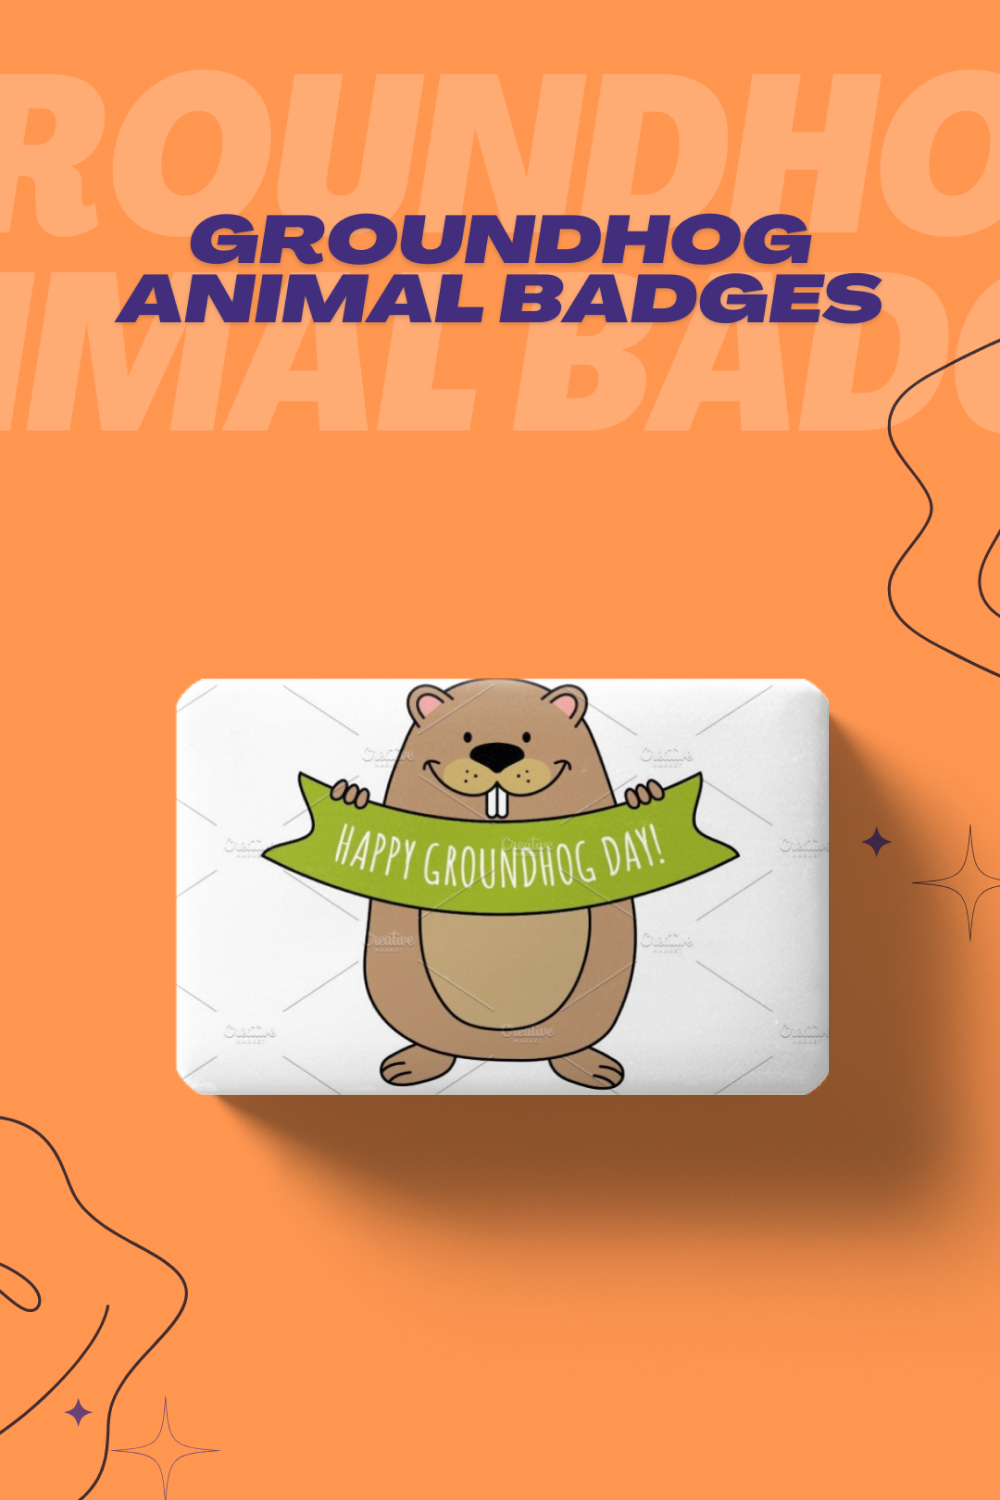 Pinterest of groundhog animal badges.